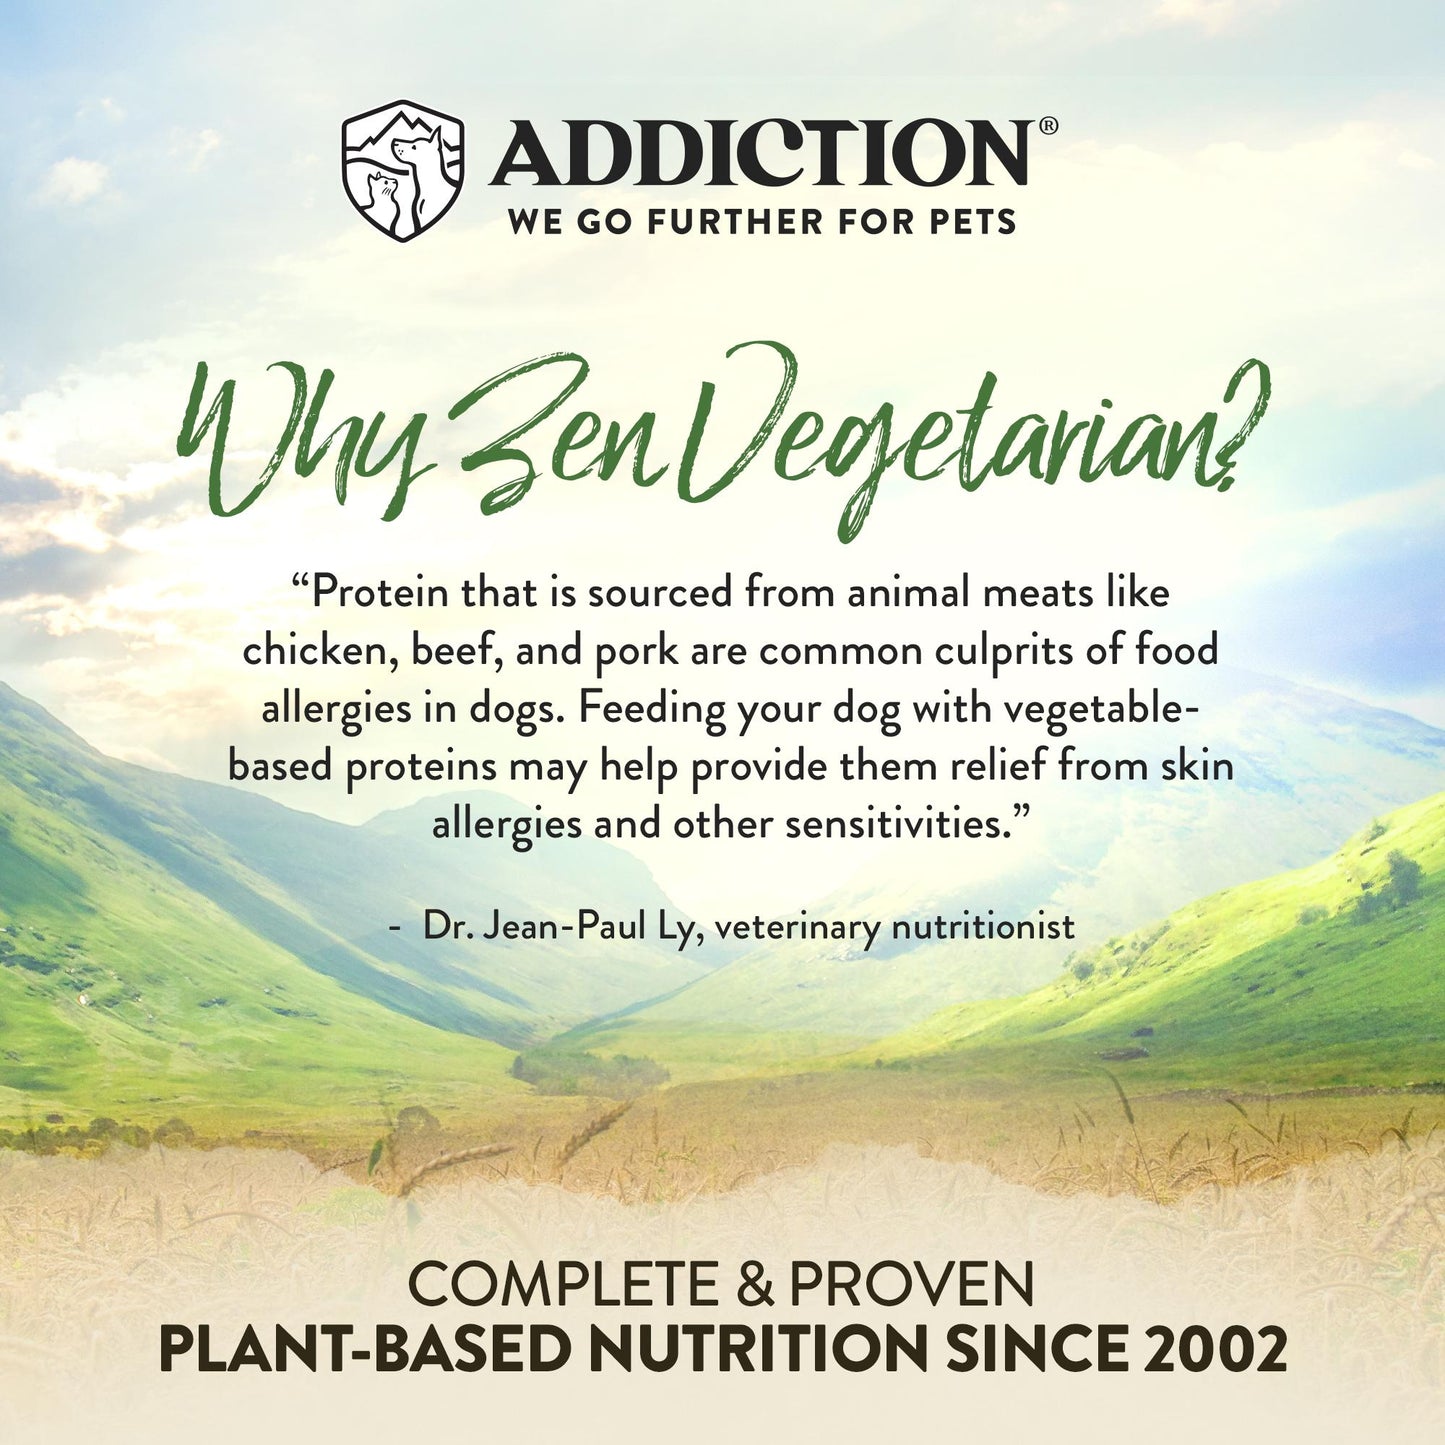 Addiction Zen Vegetarian, Sensitive Care, Vegan Dry Dog Food